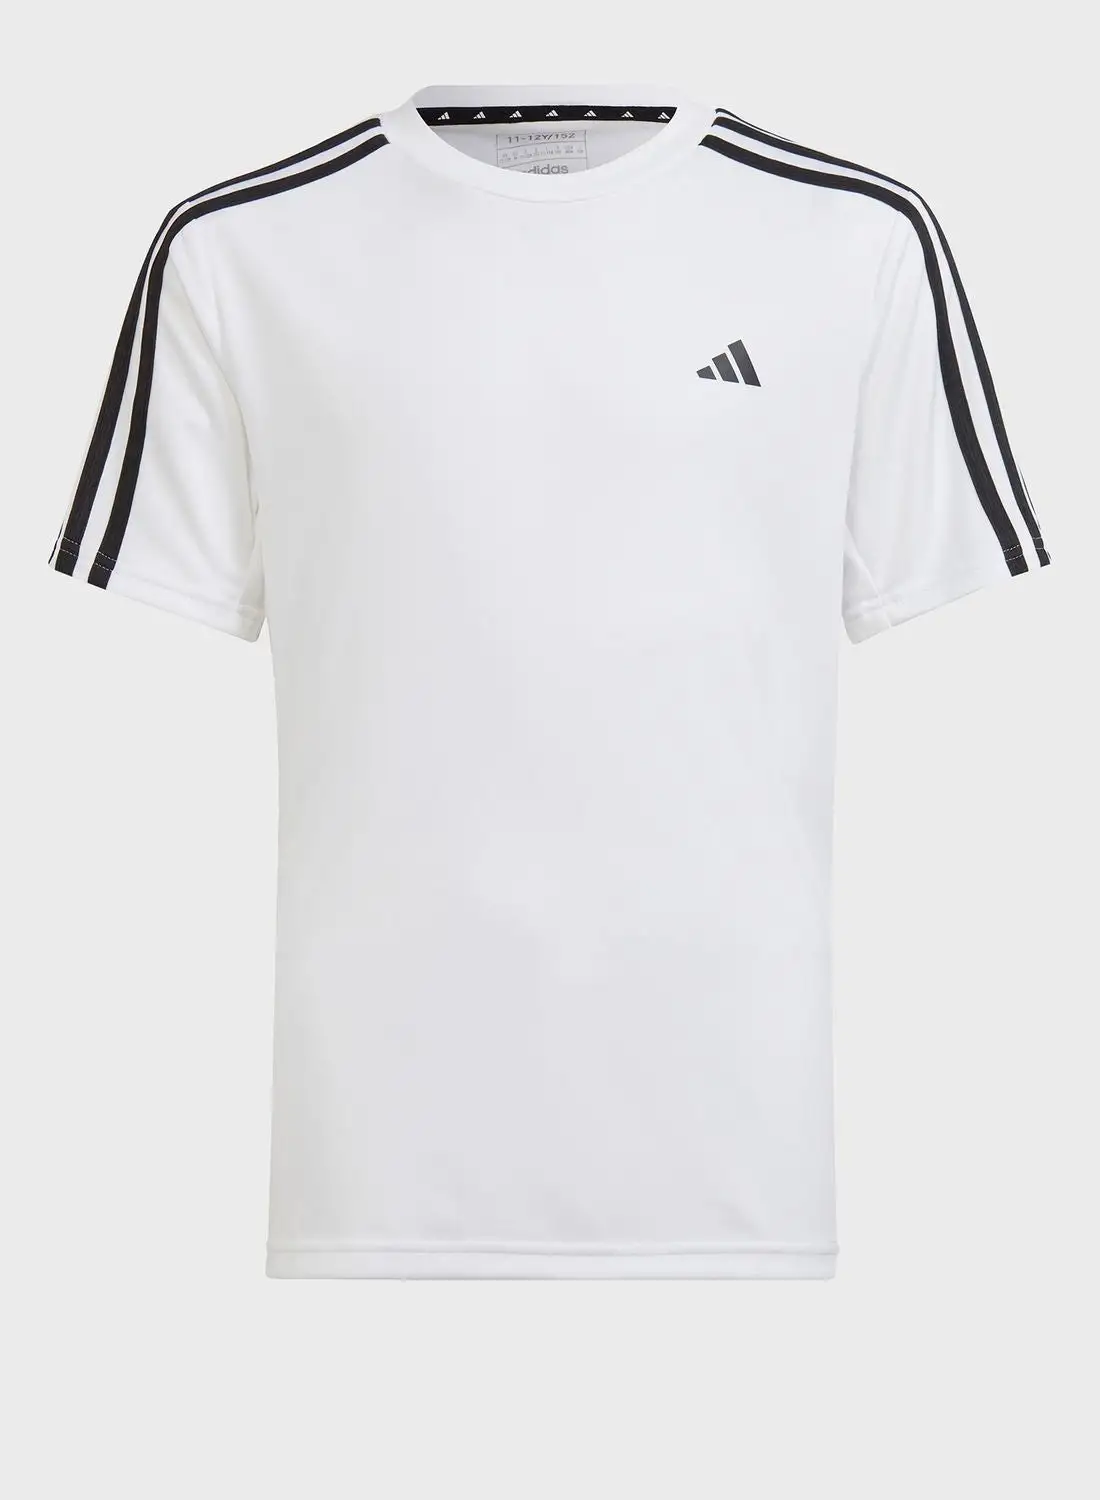 Adidas Kids Train Essential 3 Stripes T-Shirt